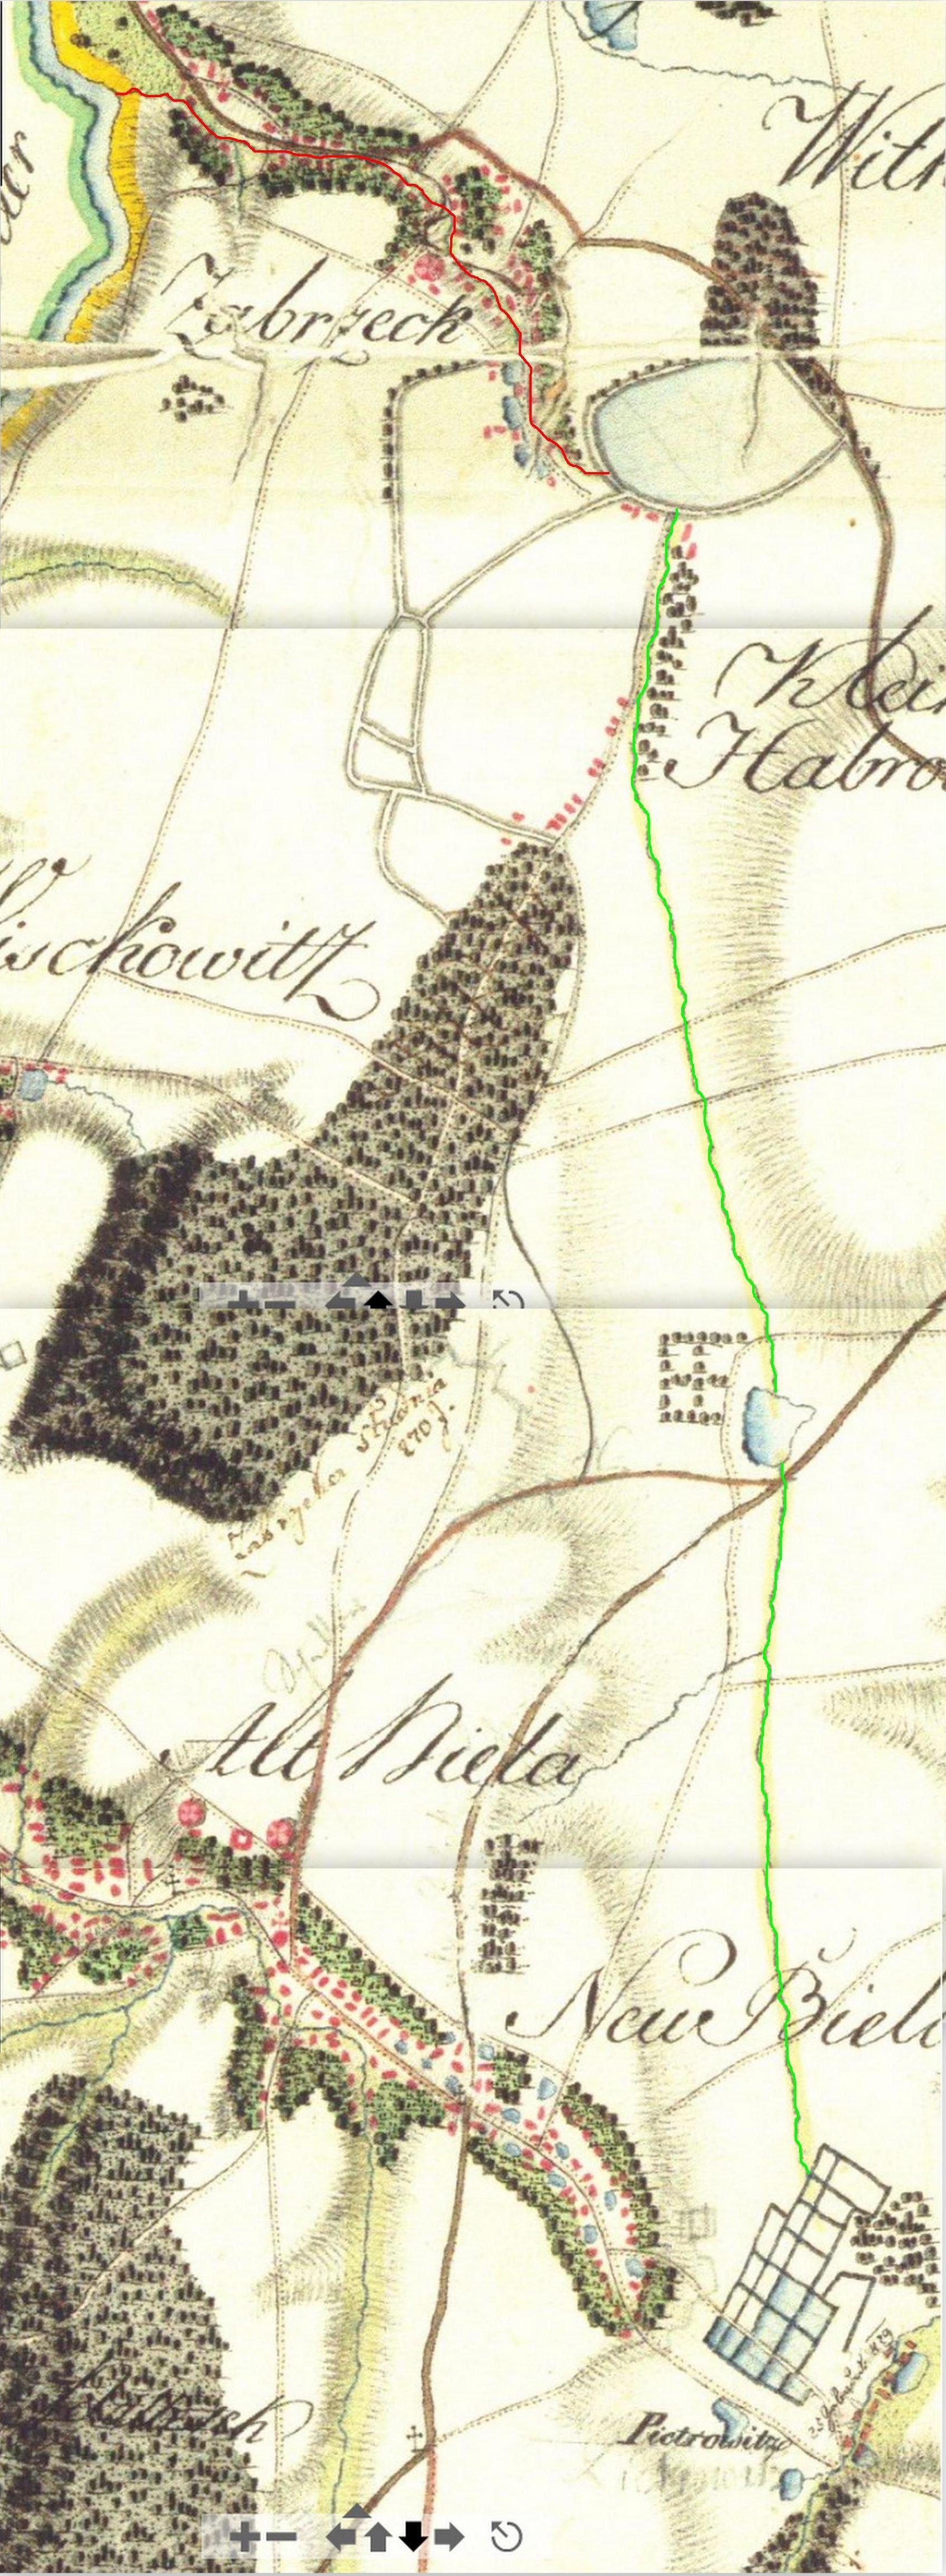 mapa 1730-1740.jpg